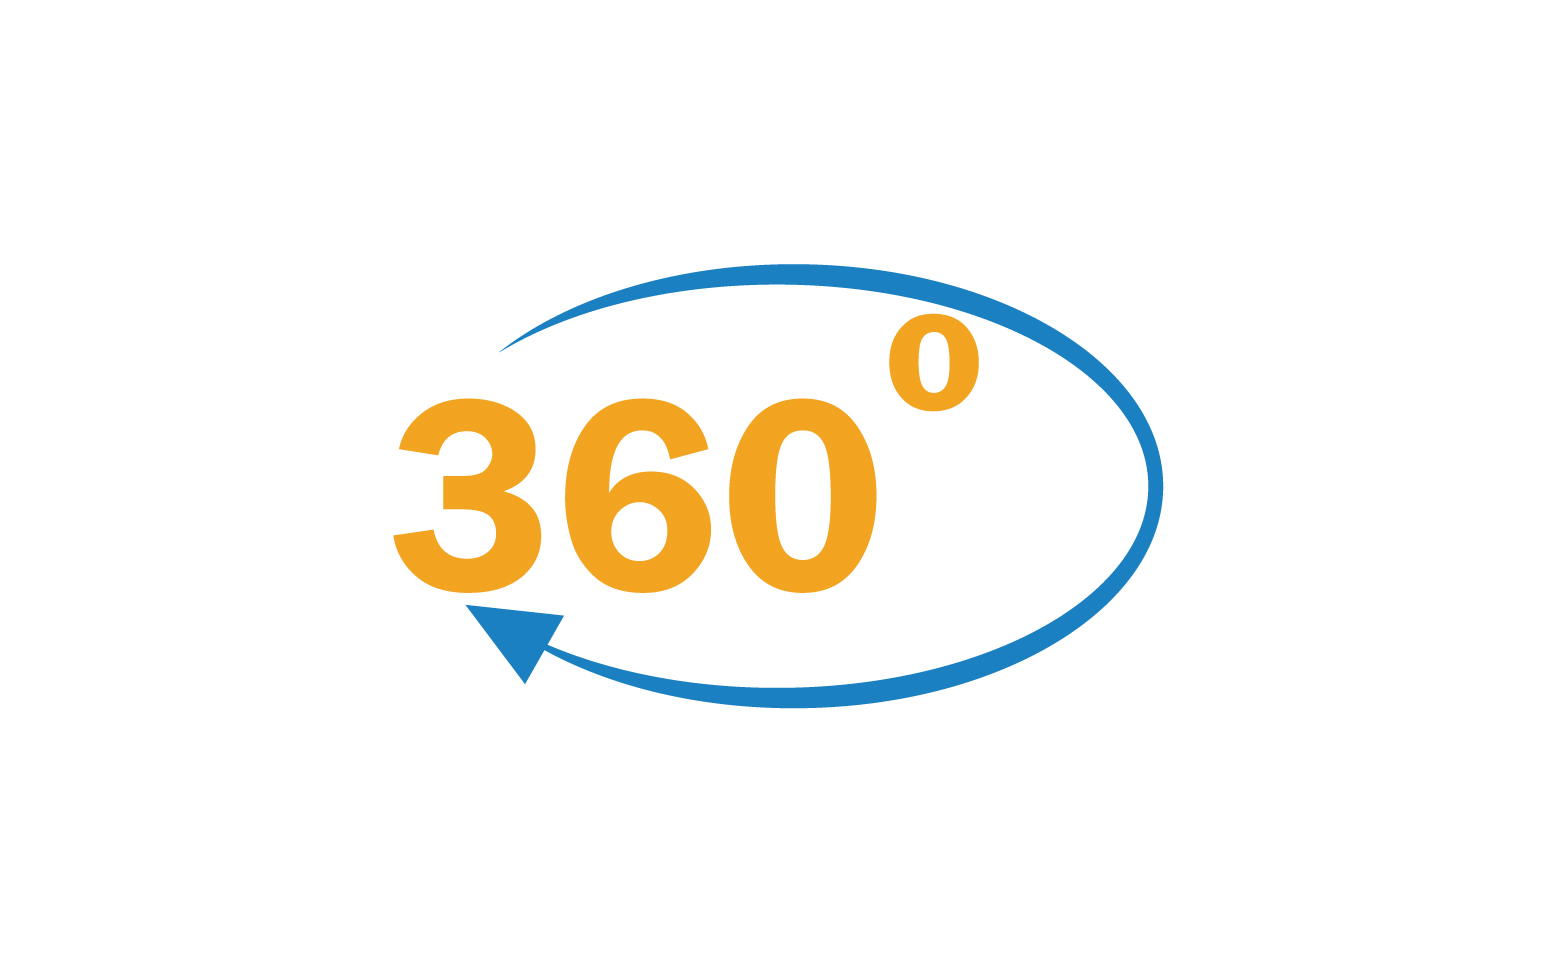 360 degree angle rotation icon symbol logo version v5